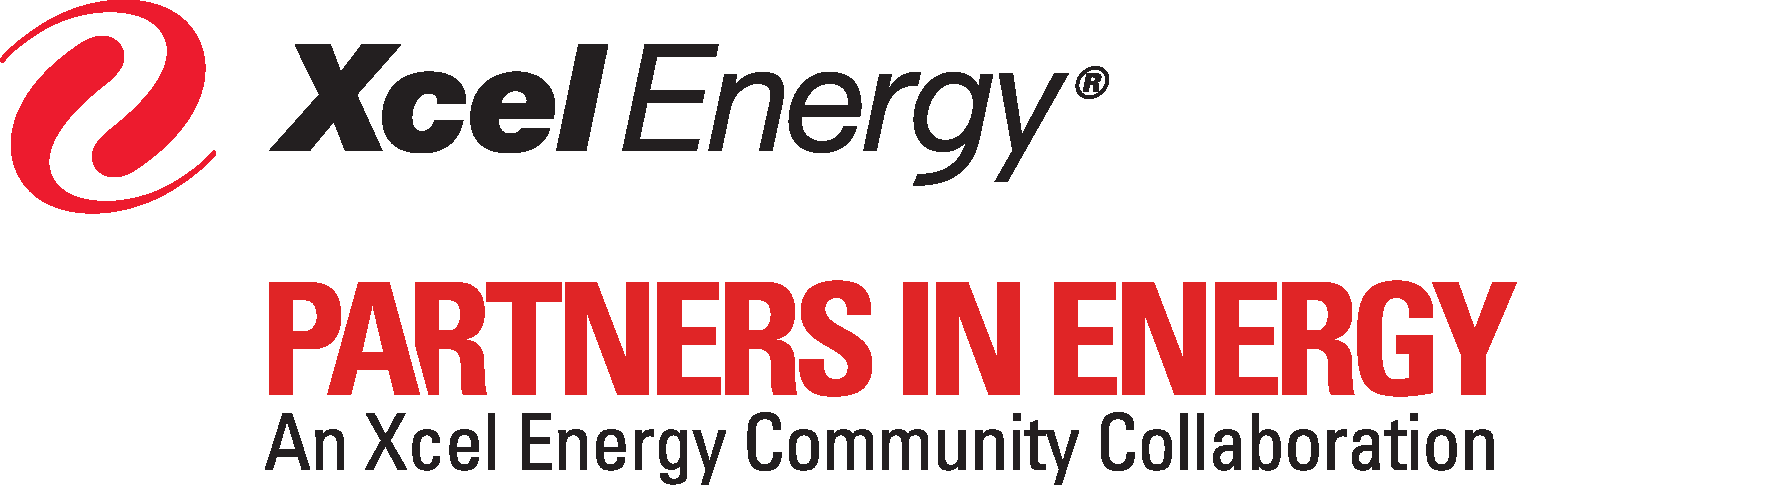 Xcel Energy | Partners in Energy